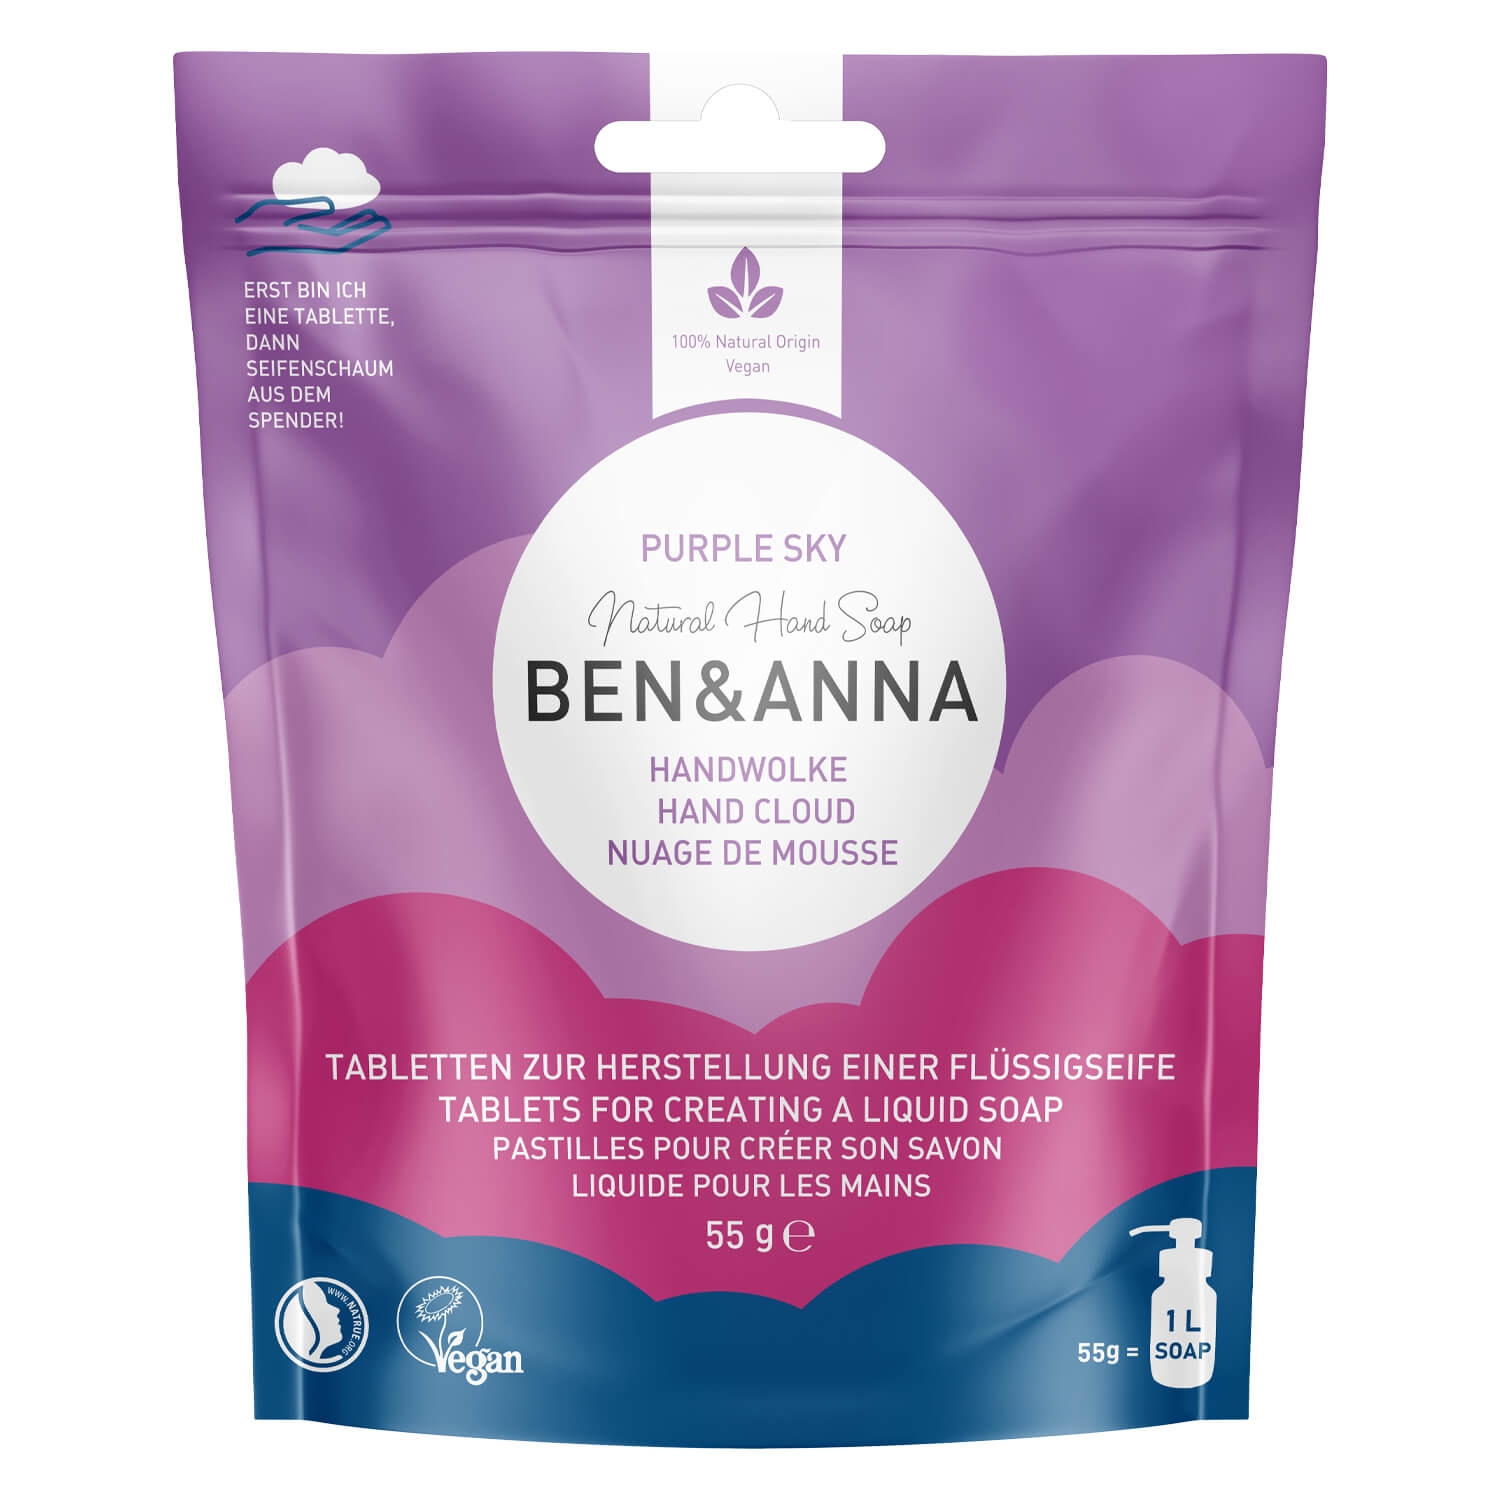 Image du produit de BEN&ANNA - Handwolke Purple Sky